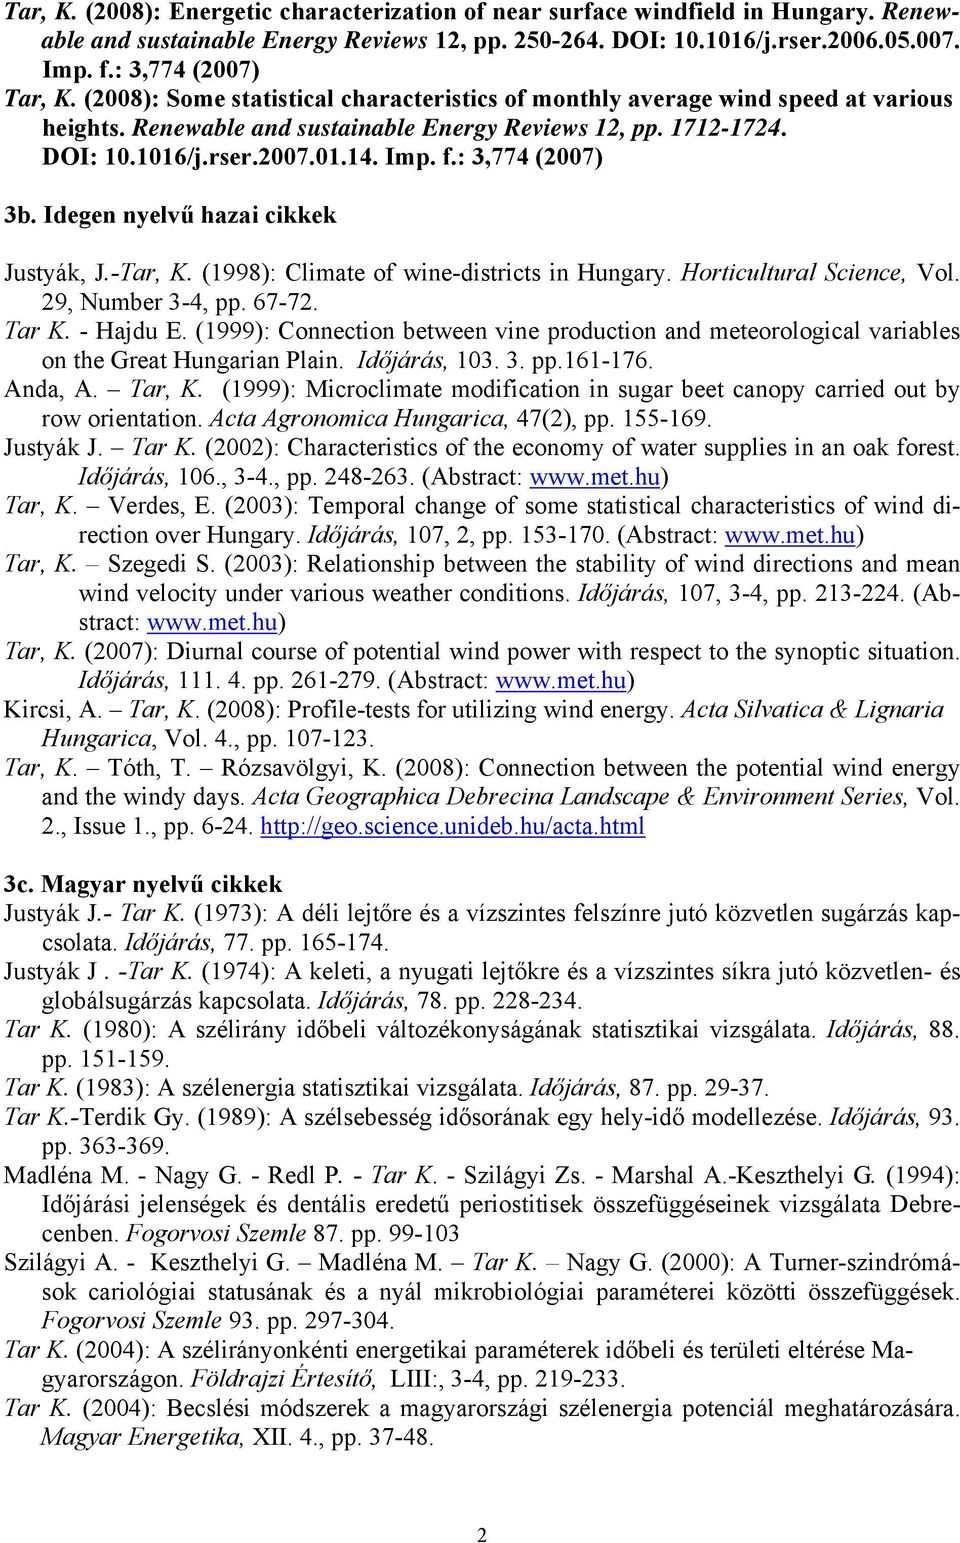 Imp. f.: 3,774 (2007) 3b. Idegen nyelvű hazai cikkek Justyák, J.-Tar, K. (1998): Climate of wine-districts in Hungary. Horticultural Science, Vol. 29, Number 3-4, pp. 67-72. Tar K. - Hajdu E.